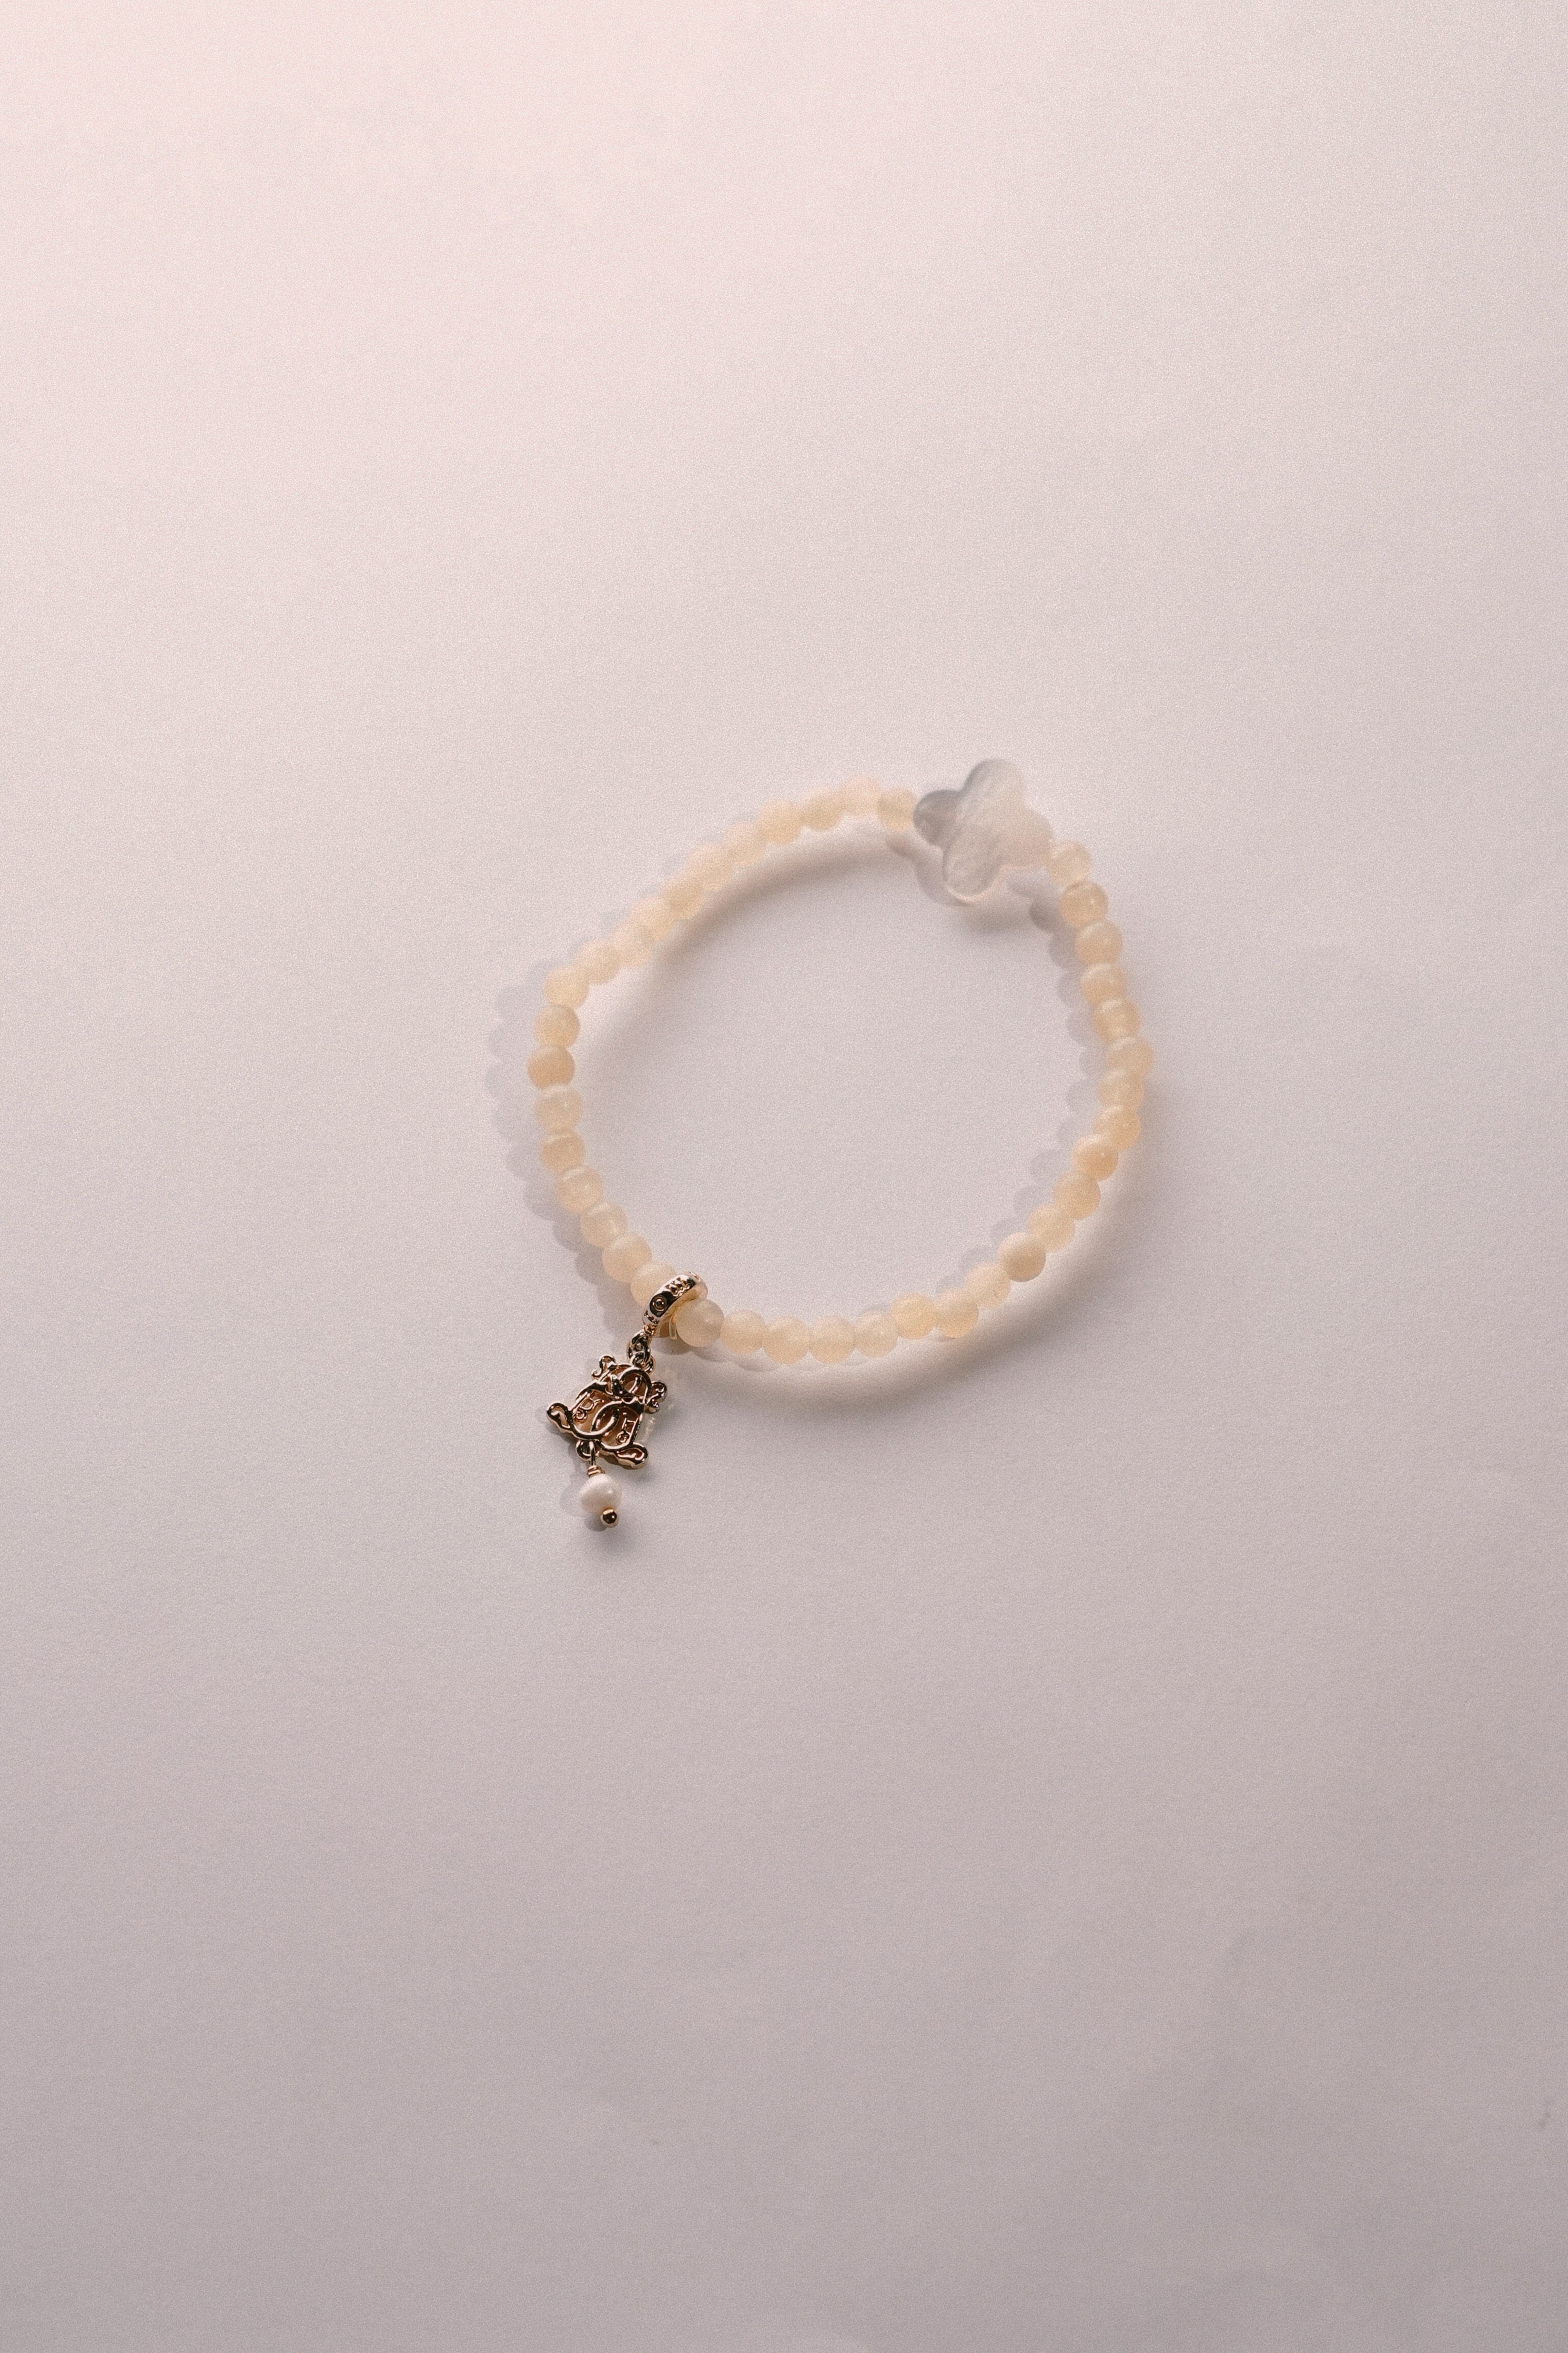 bracelet placed on white background